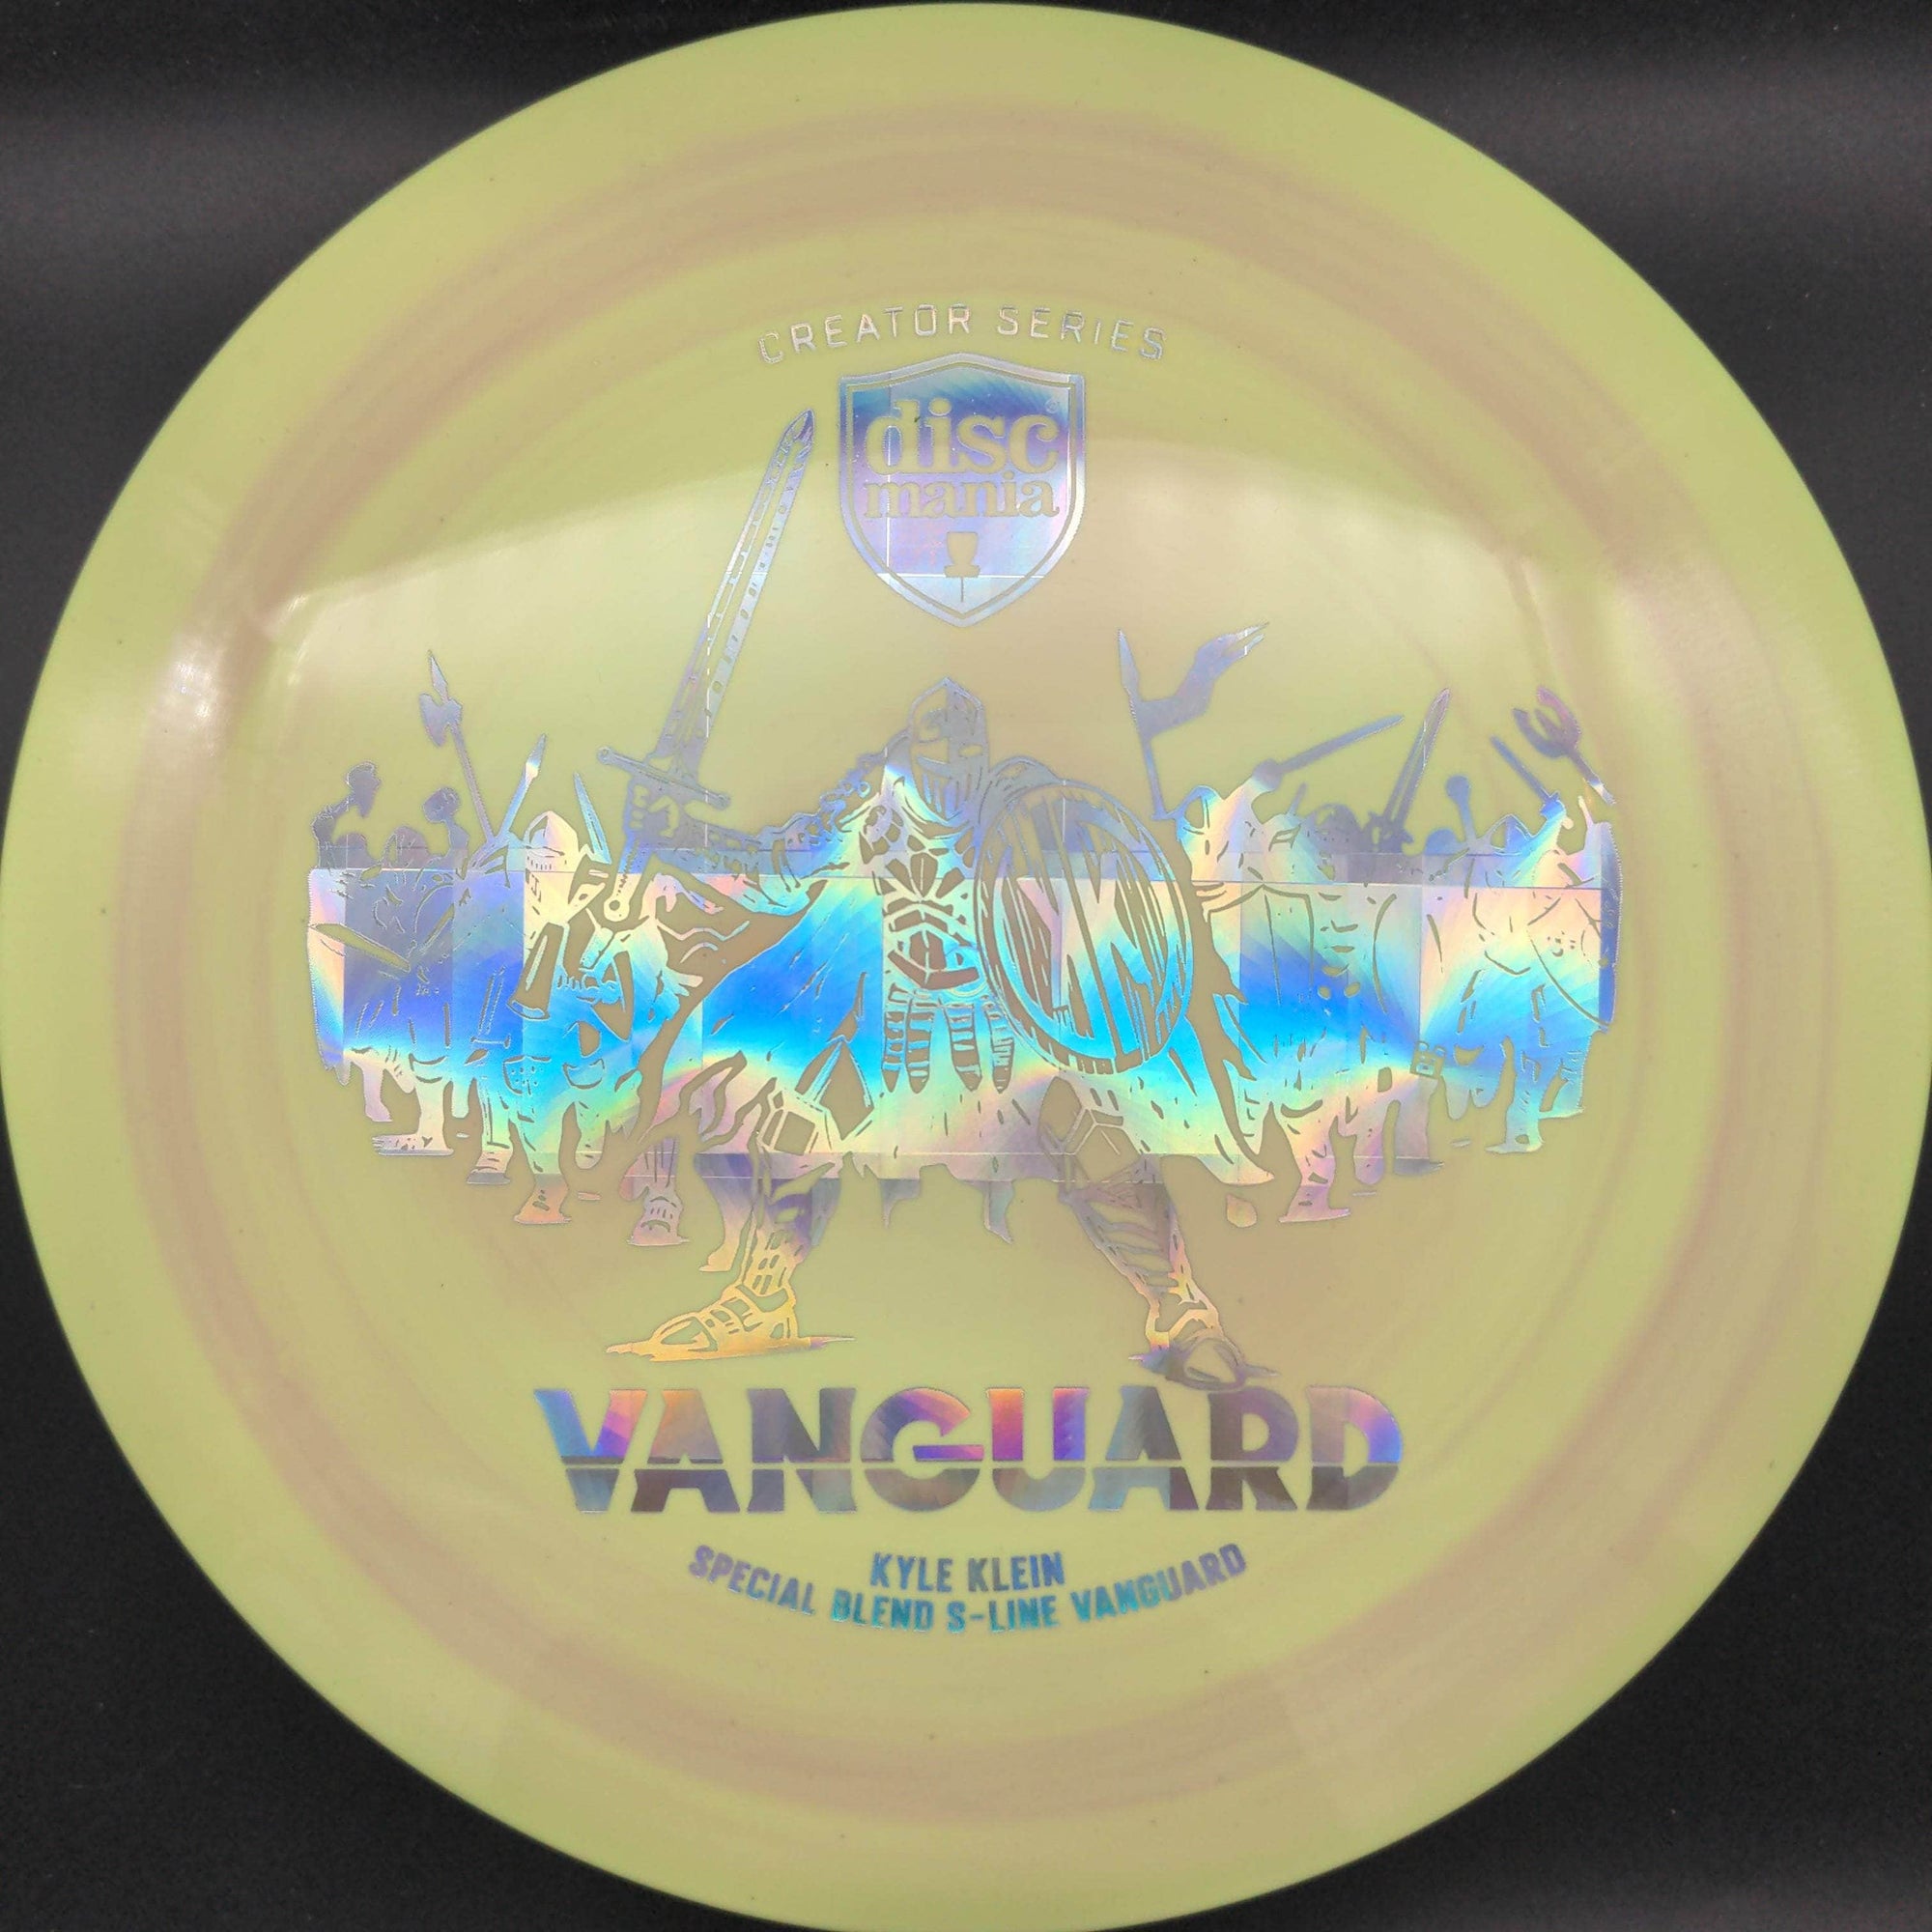 Discmania Fairway Driver Yellow/Pink Swirl Stamp 173g Vanguard, Special Blend S-Line, Kyle Klein 2023